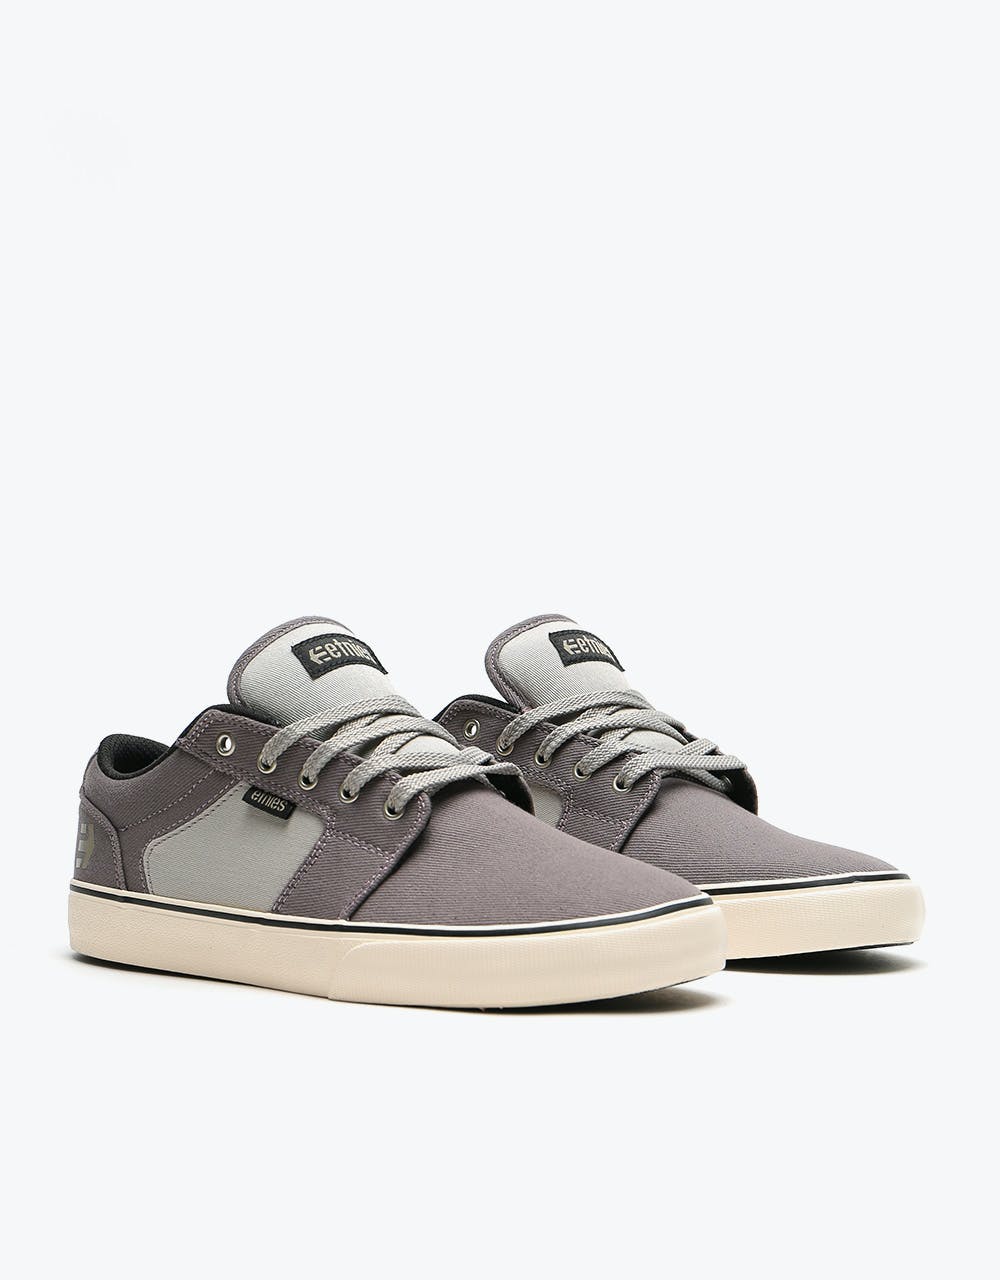 Etnies Barge Preserve Skate Shoes - Grey/Tan